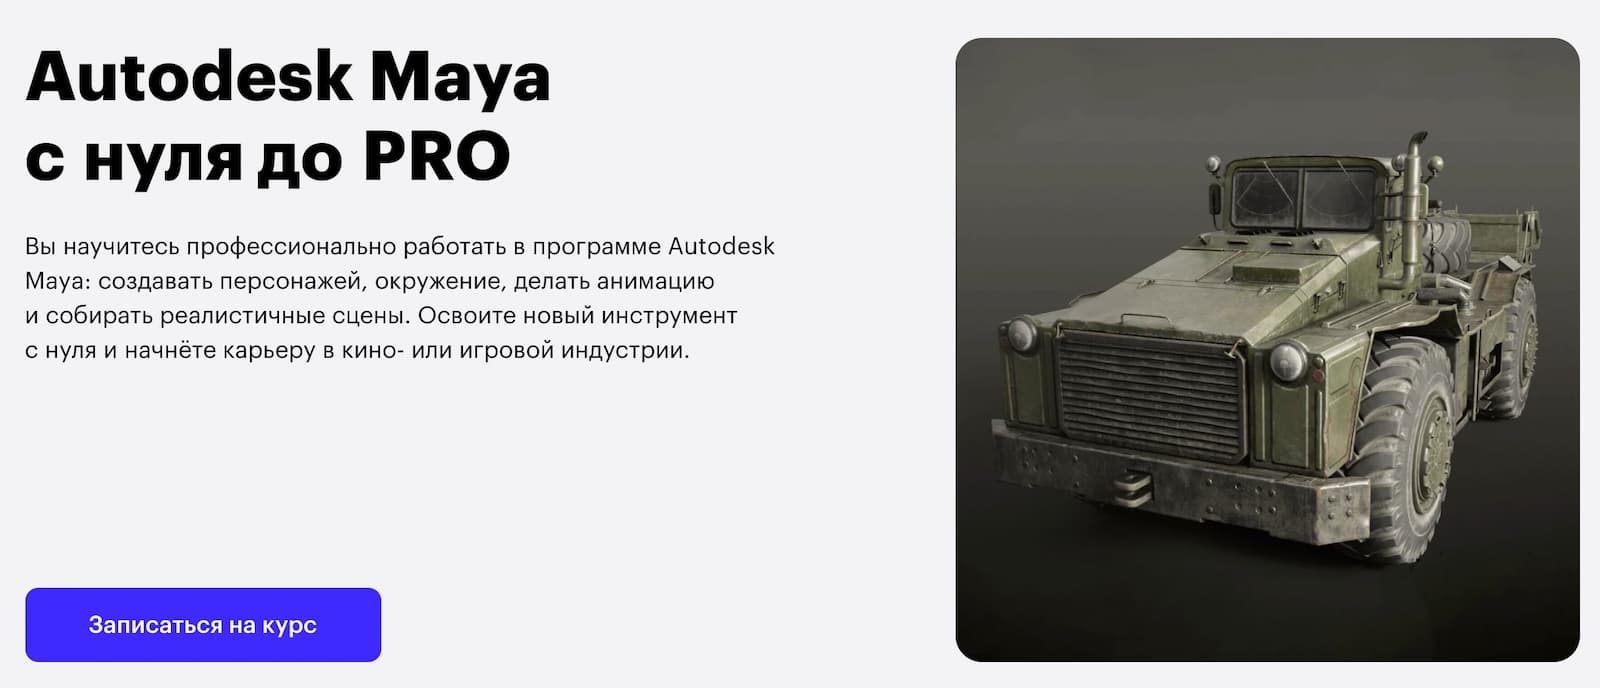 Записаться на курс «Autodesk Maya с нуля до PRO» от Skillbox